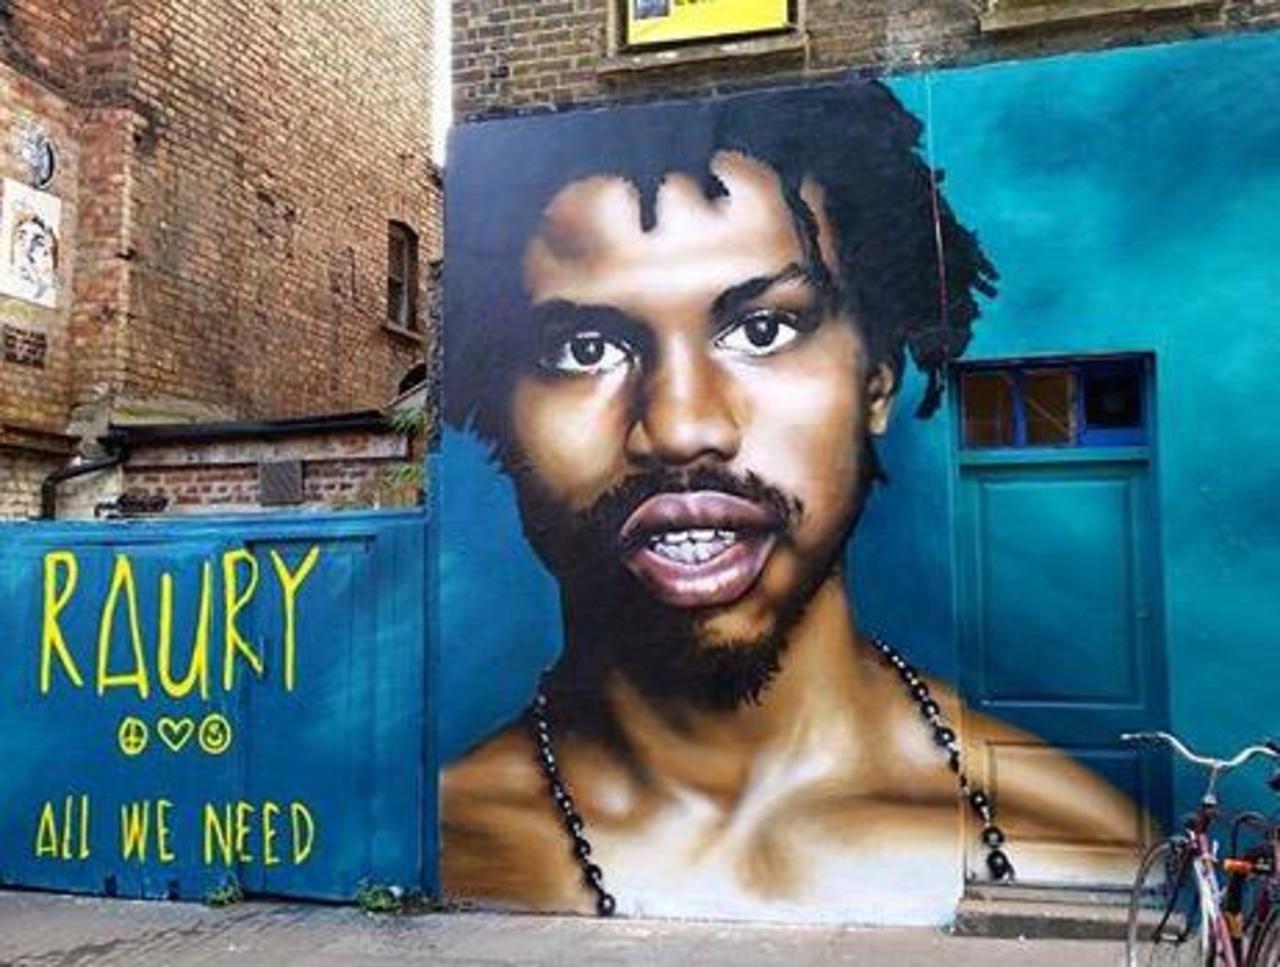 New Street Art of Raury by Olliver Switch in Brick Lane 

#art #graffiti #mural #streetart http://t.co/xDgzOyXm7v